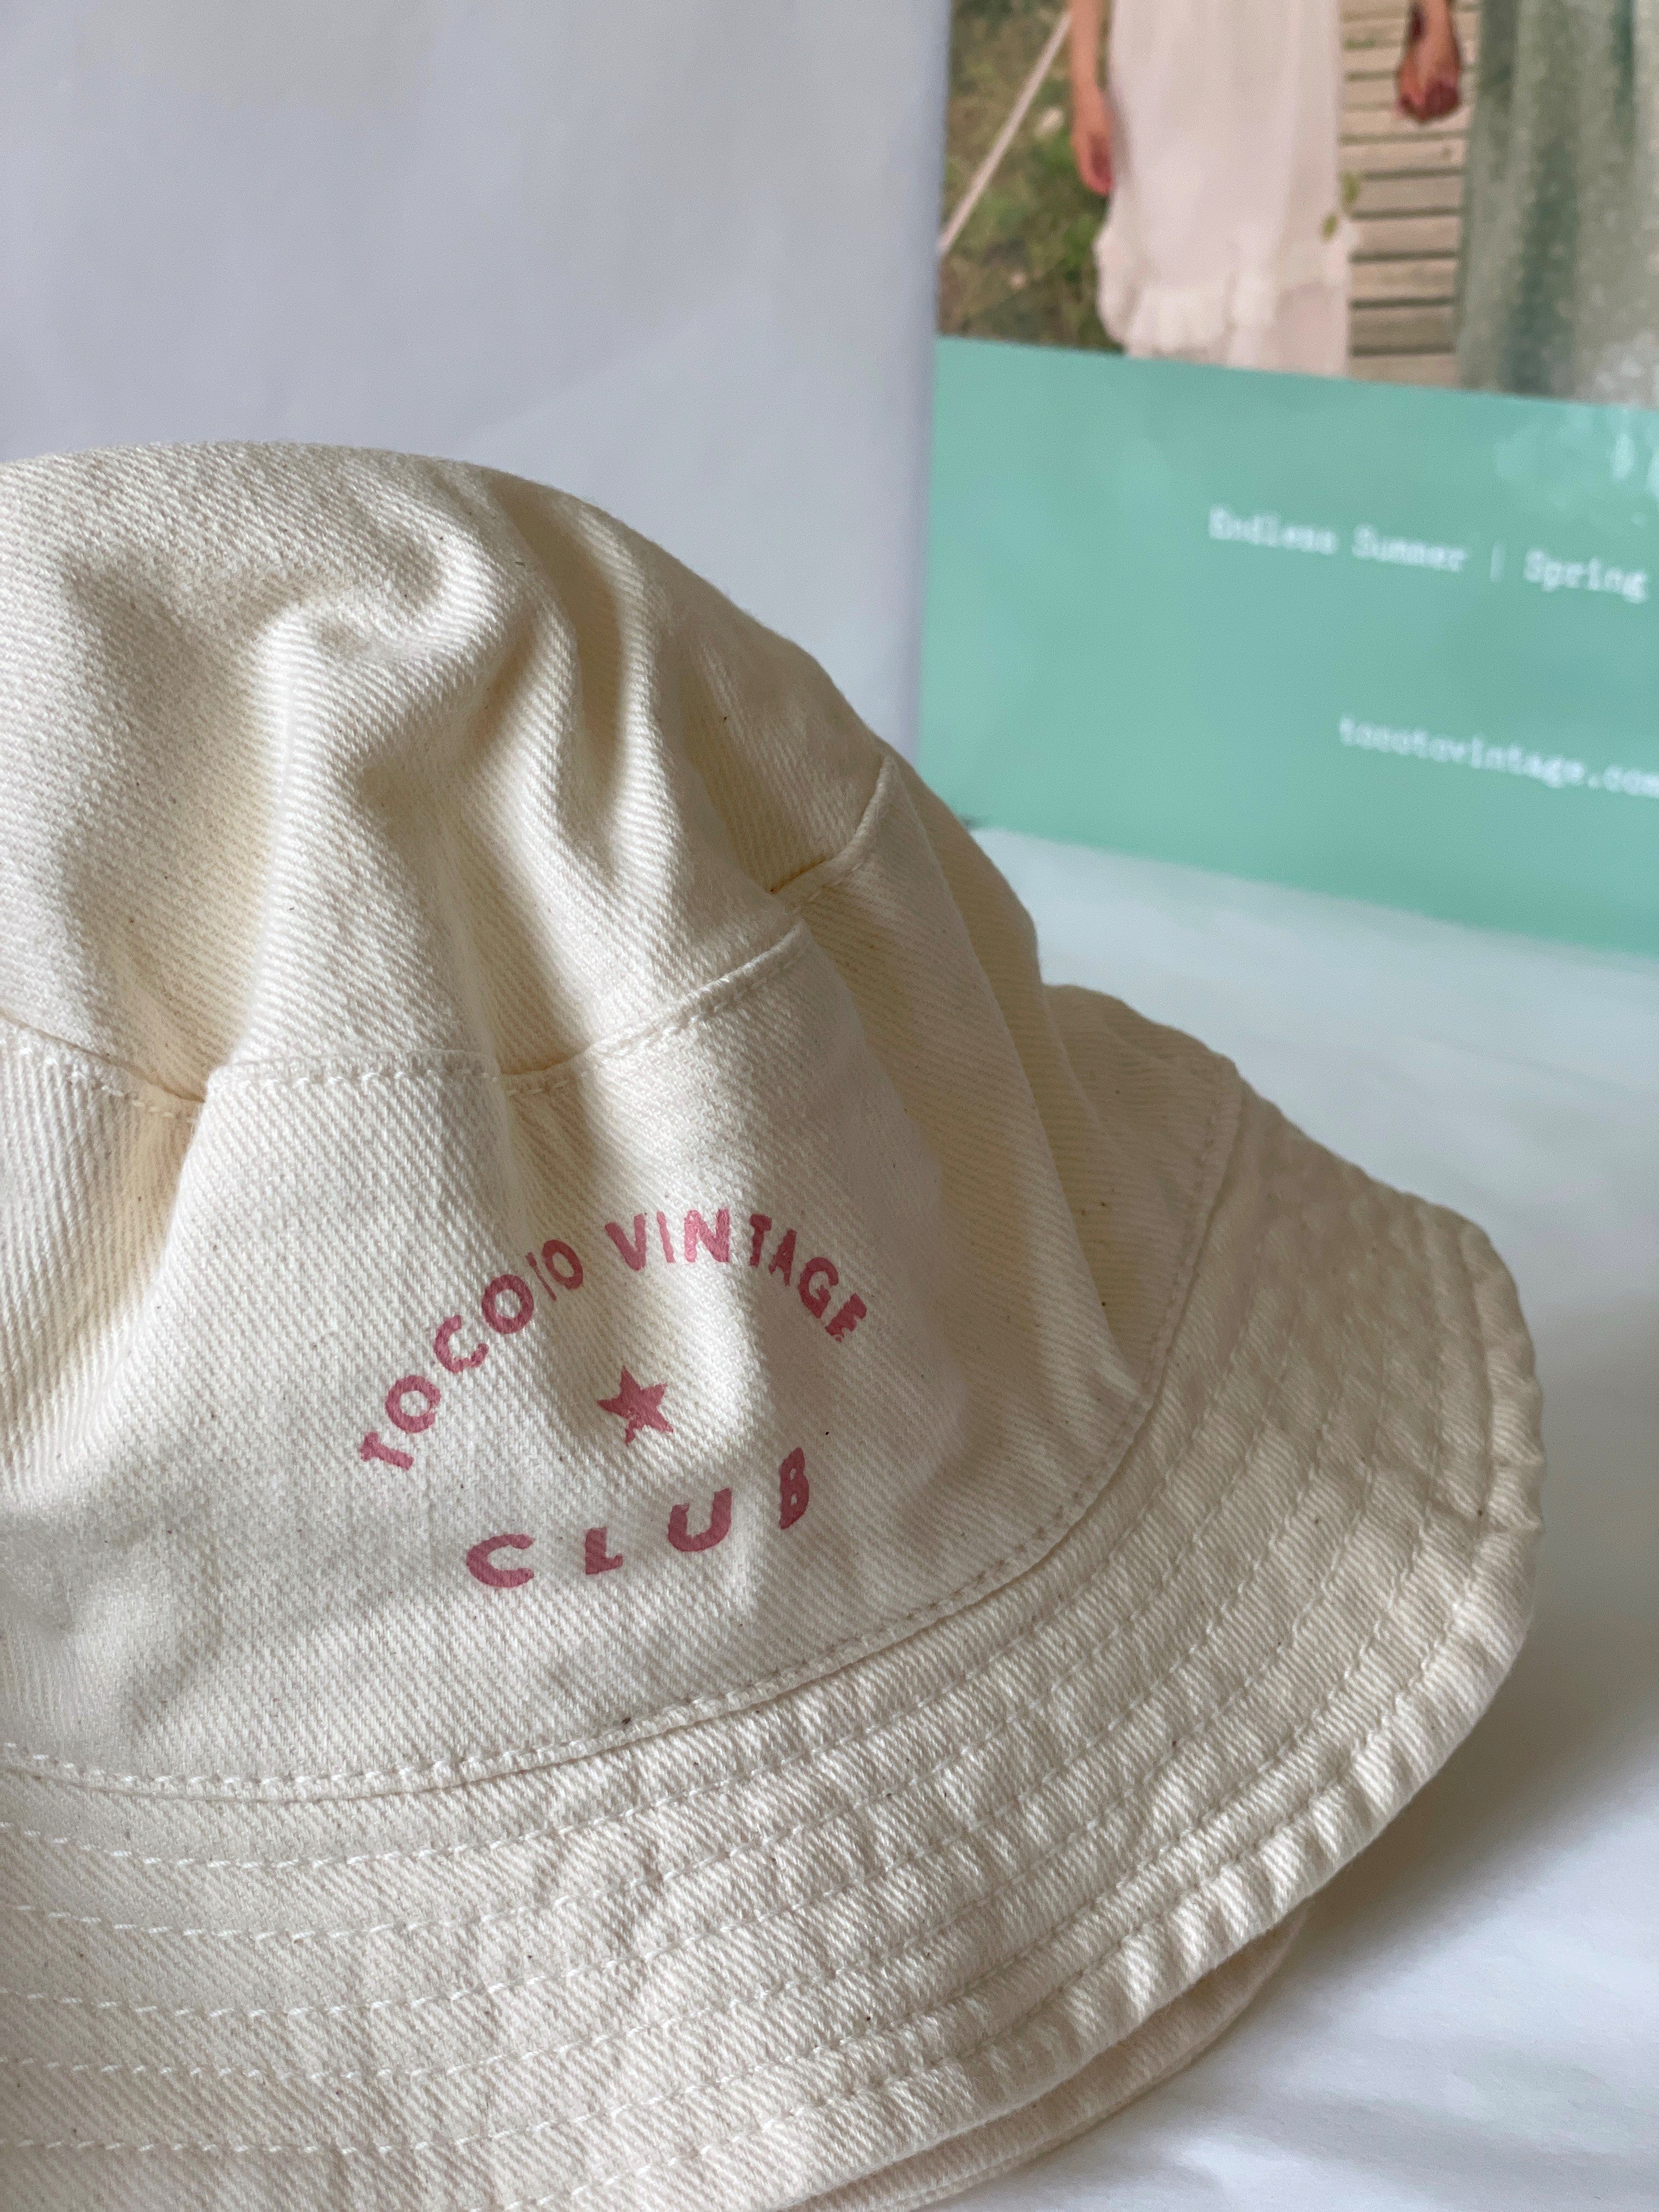 Denim Hat "TOCOTO VINTAGE CLUB" - white